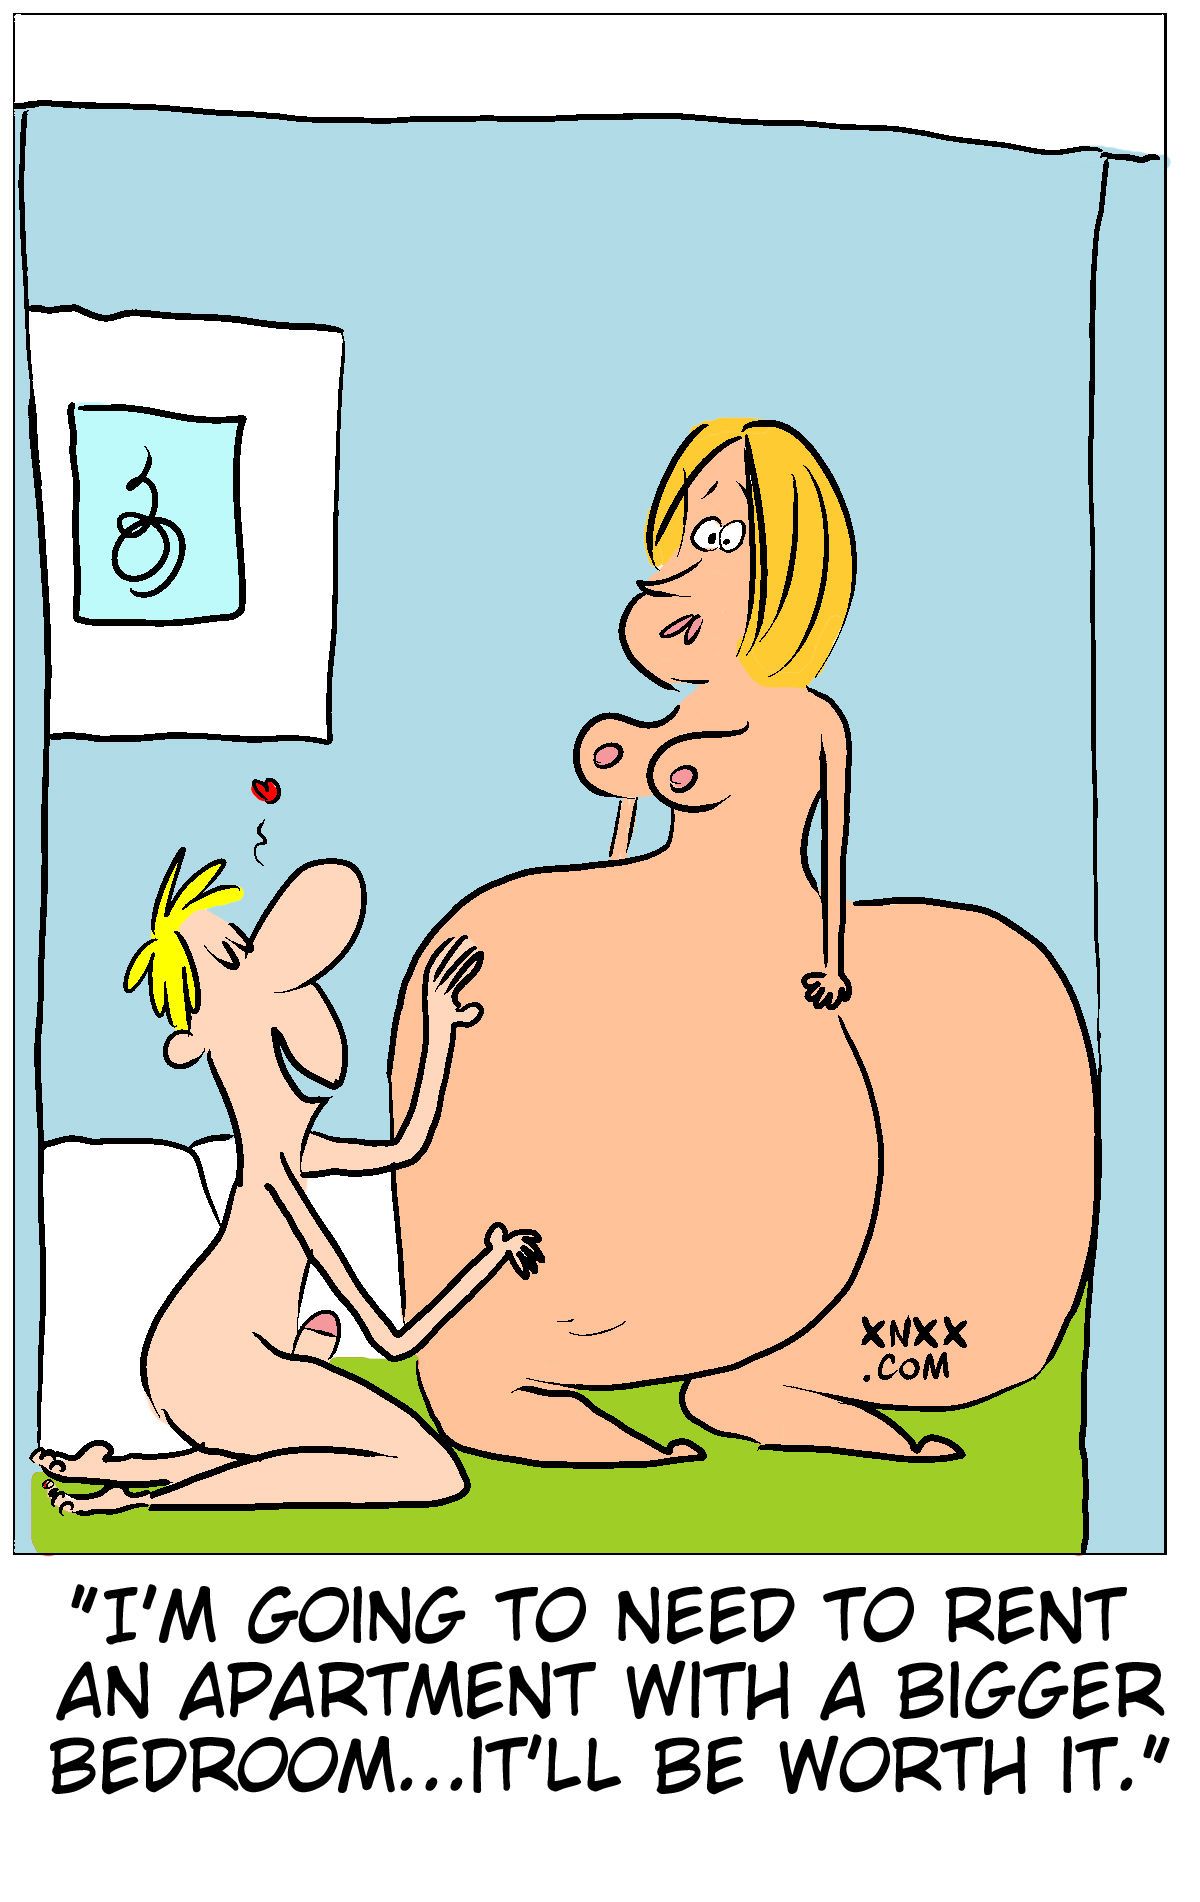 xnxx humoristische Erwachsene Cartoons Januar 2010 _ Februar 2010 _ März 2010 Teil 2